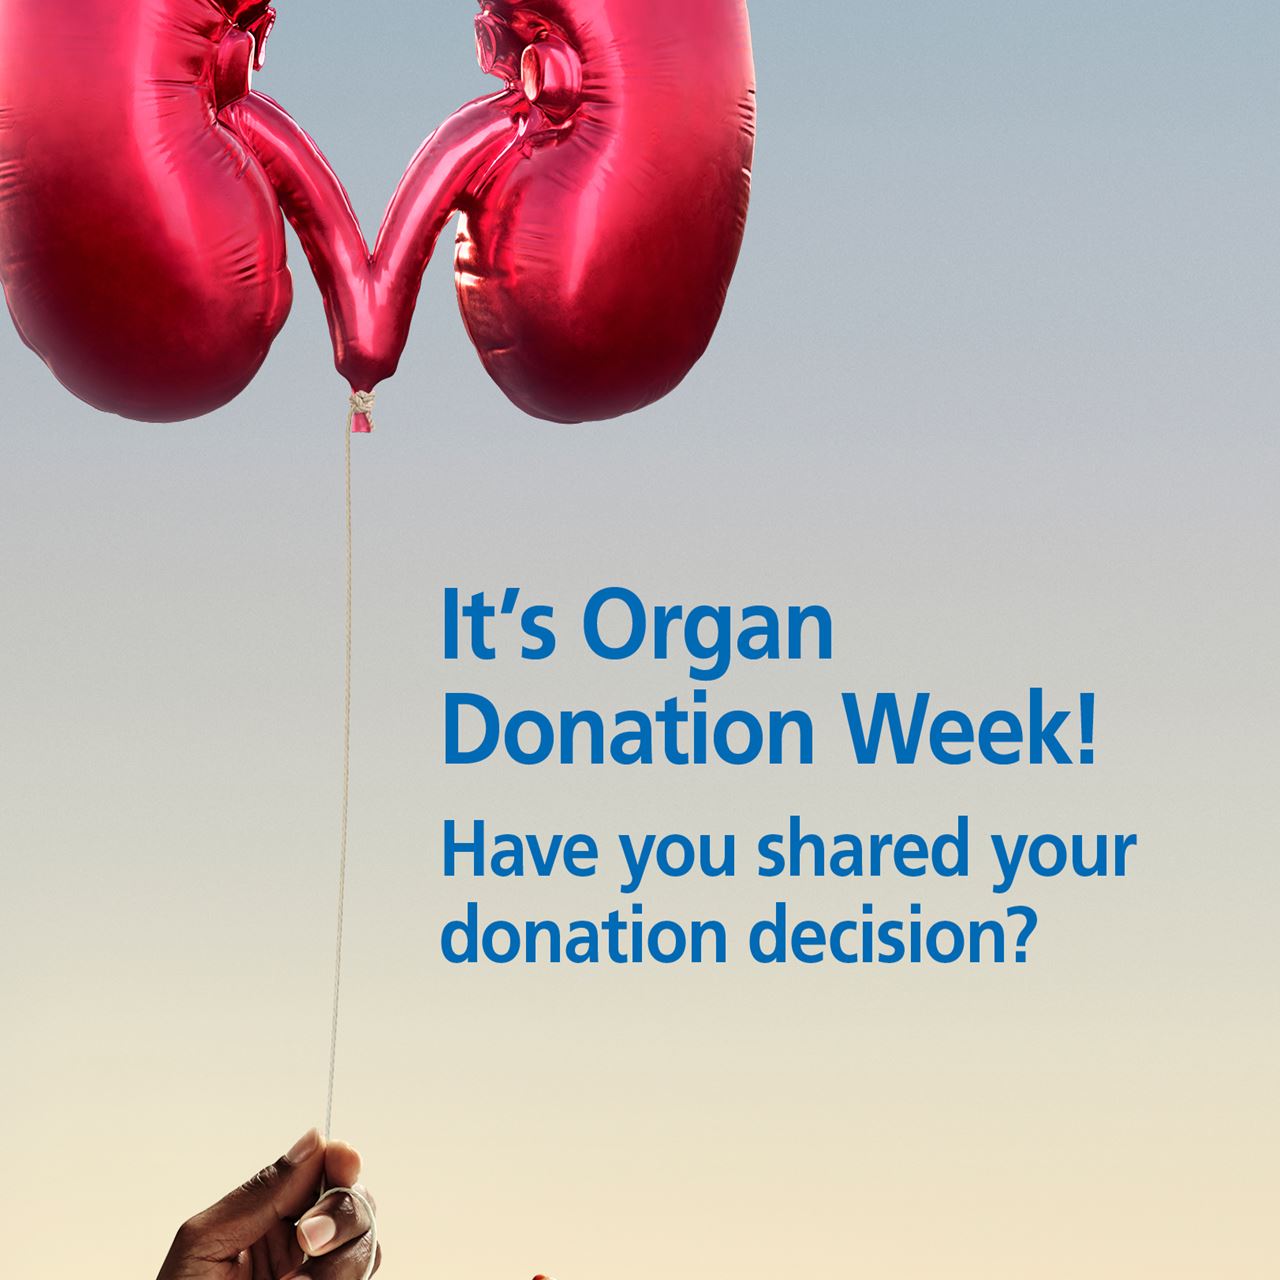 Organ donation week